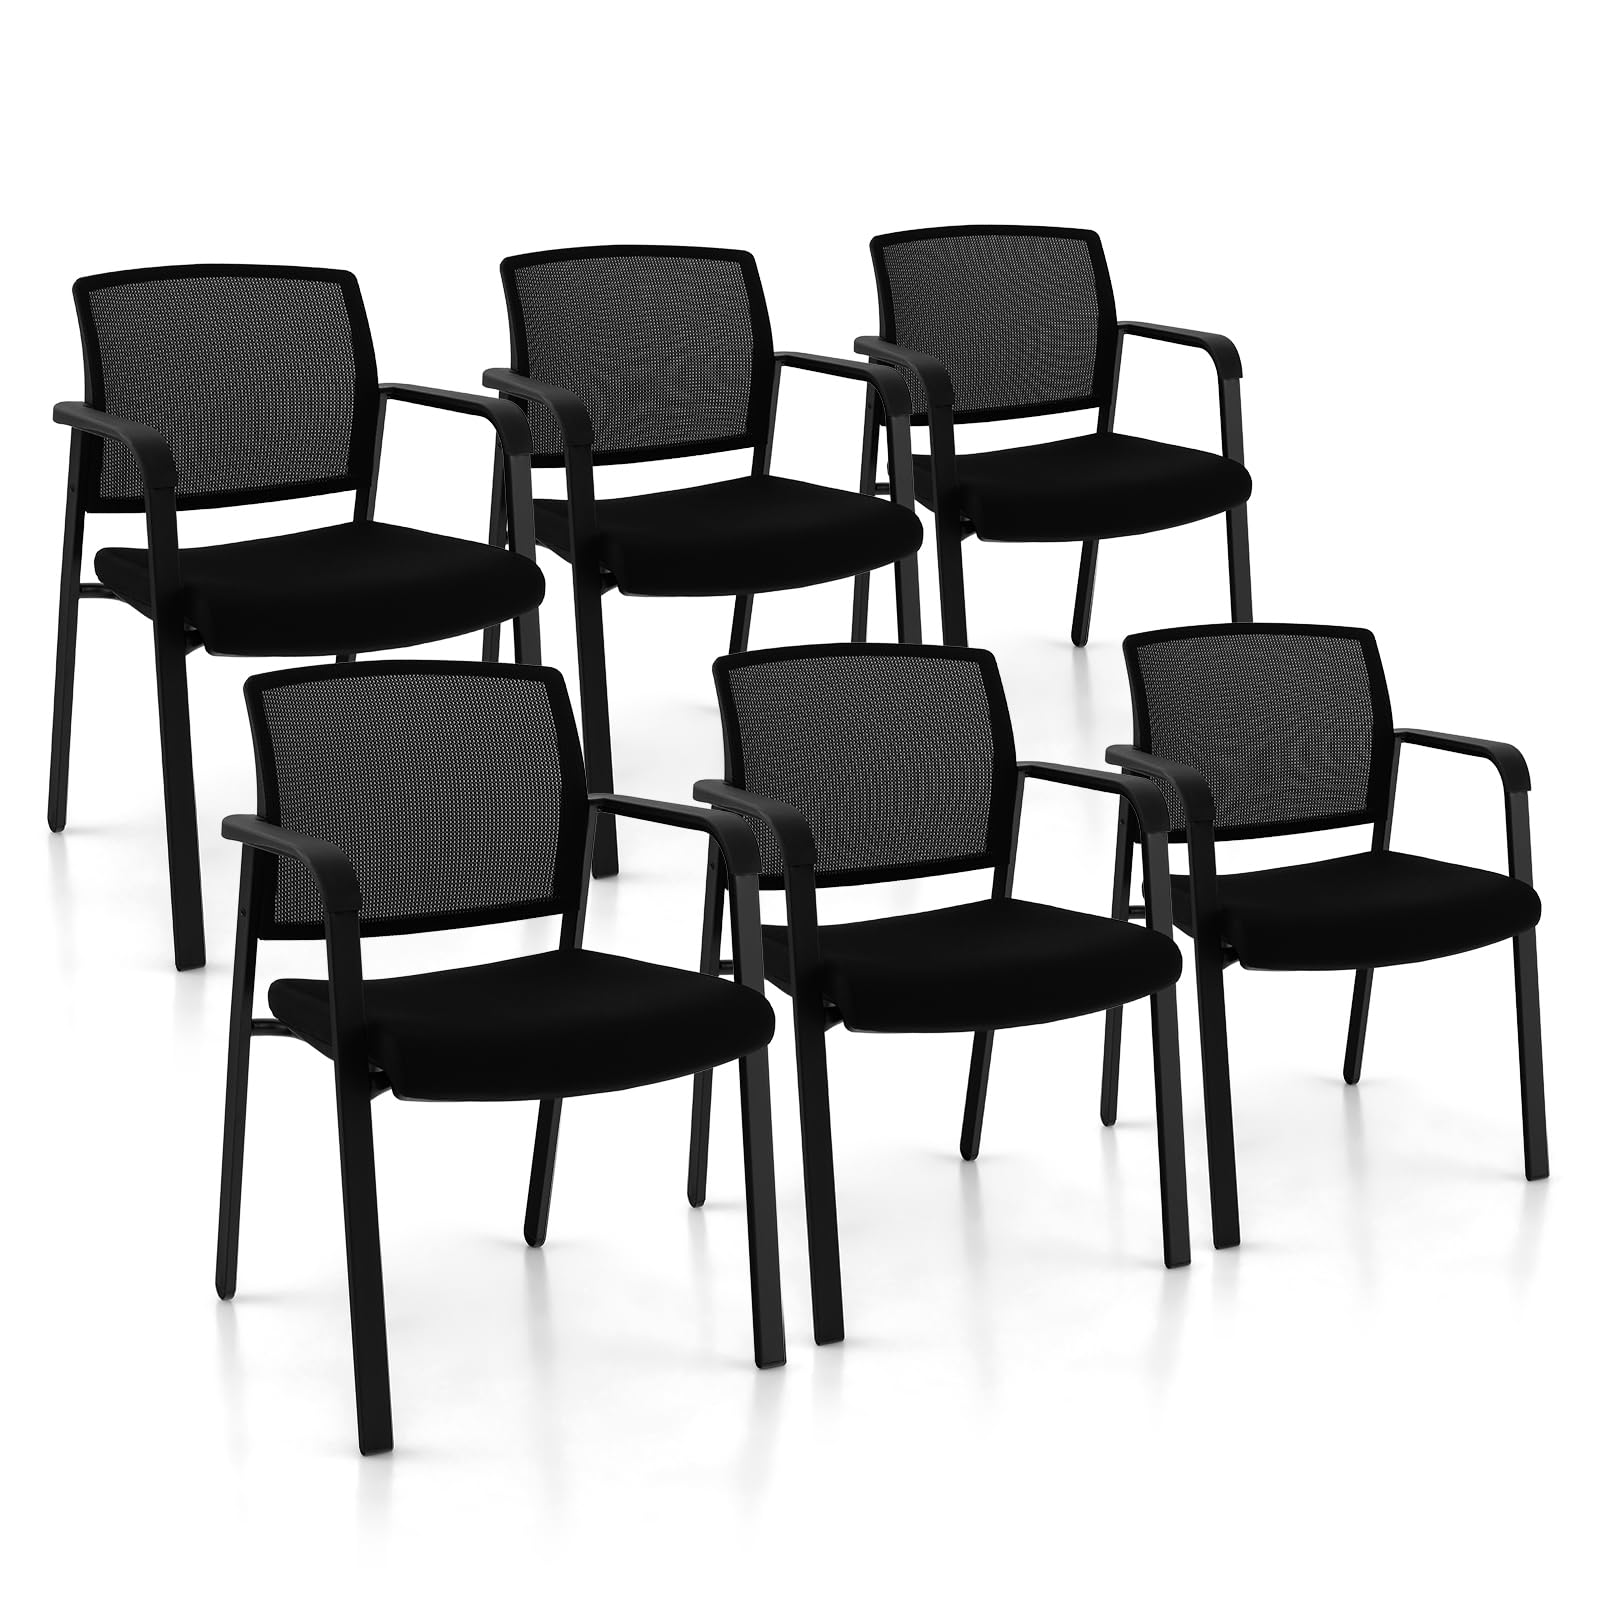 Reception Room Chair Set - Giantex